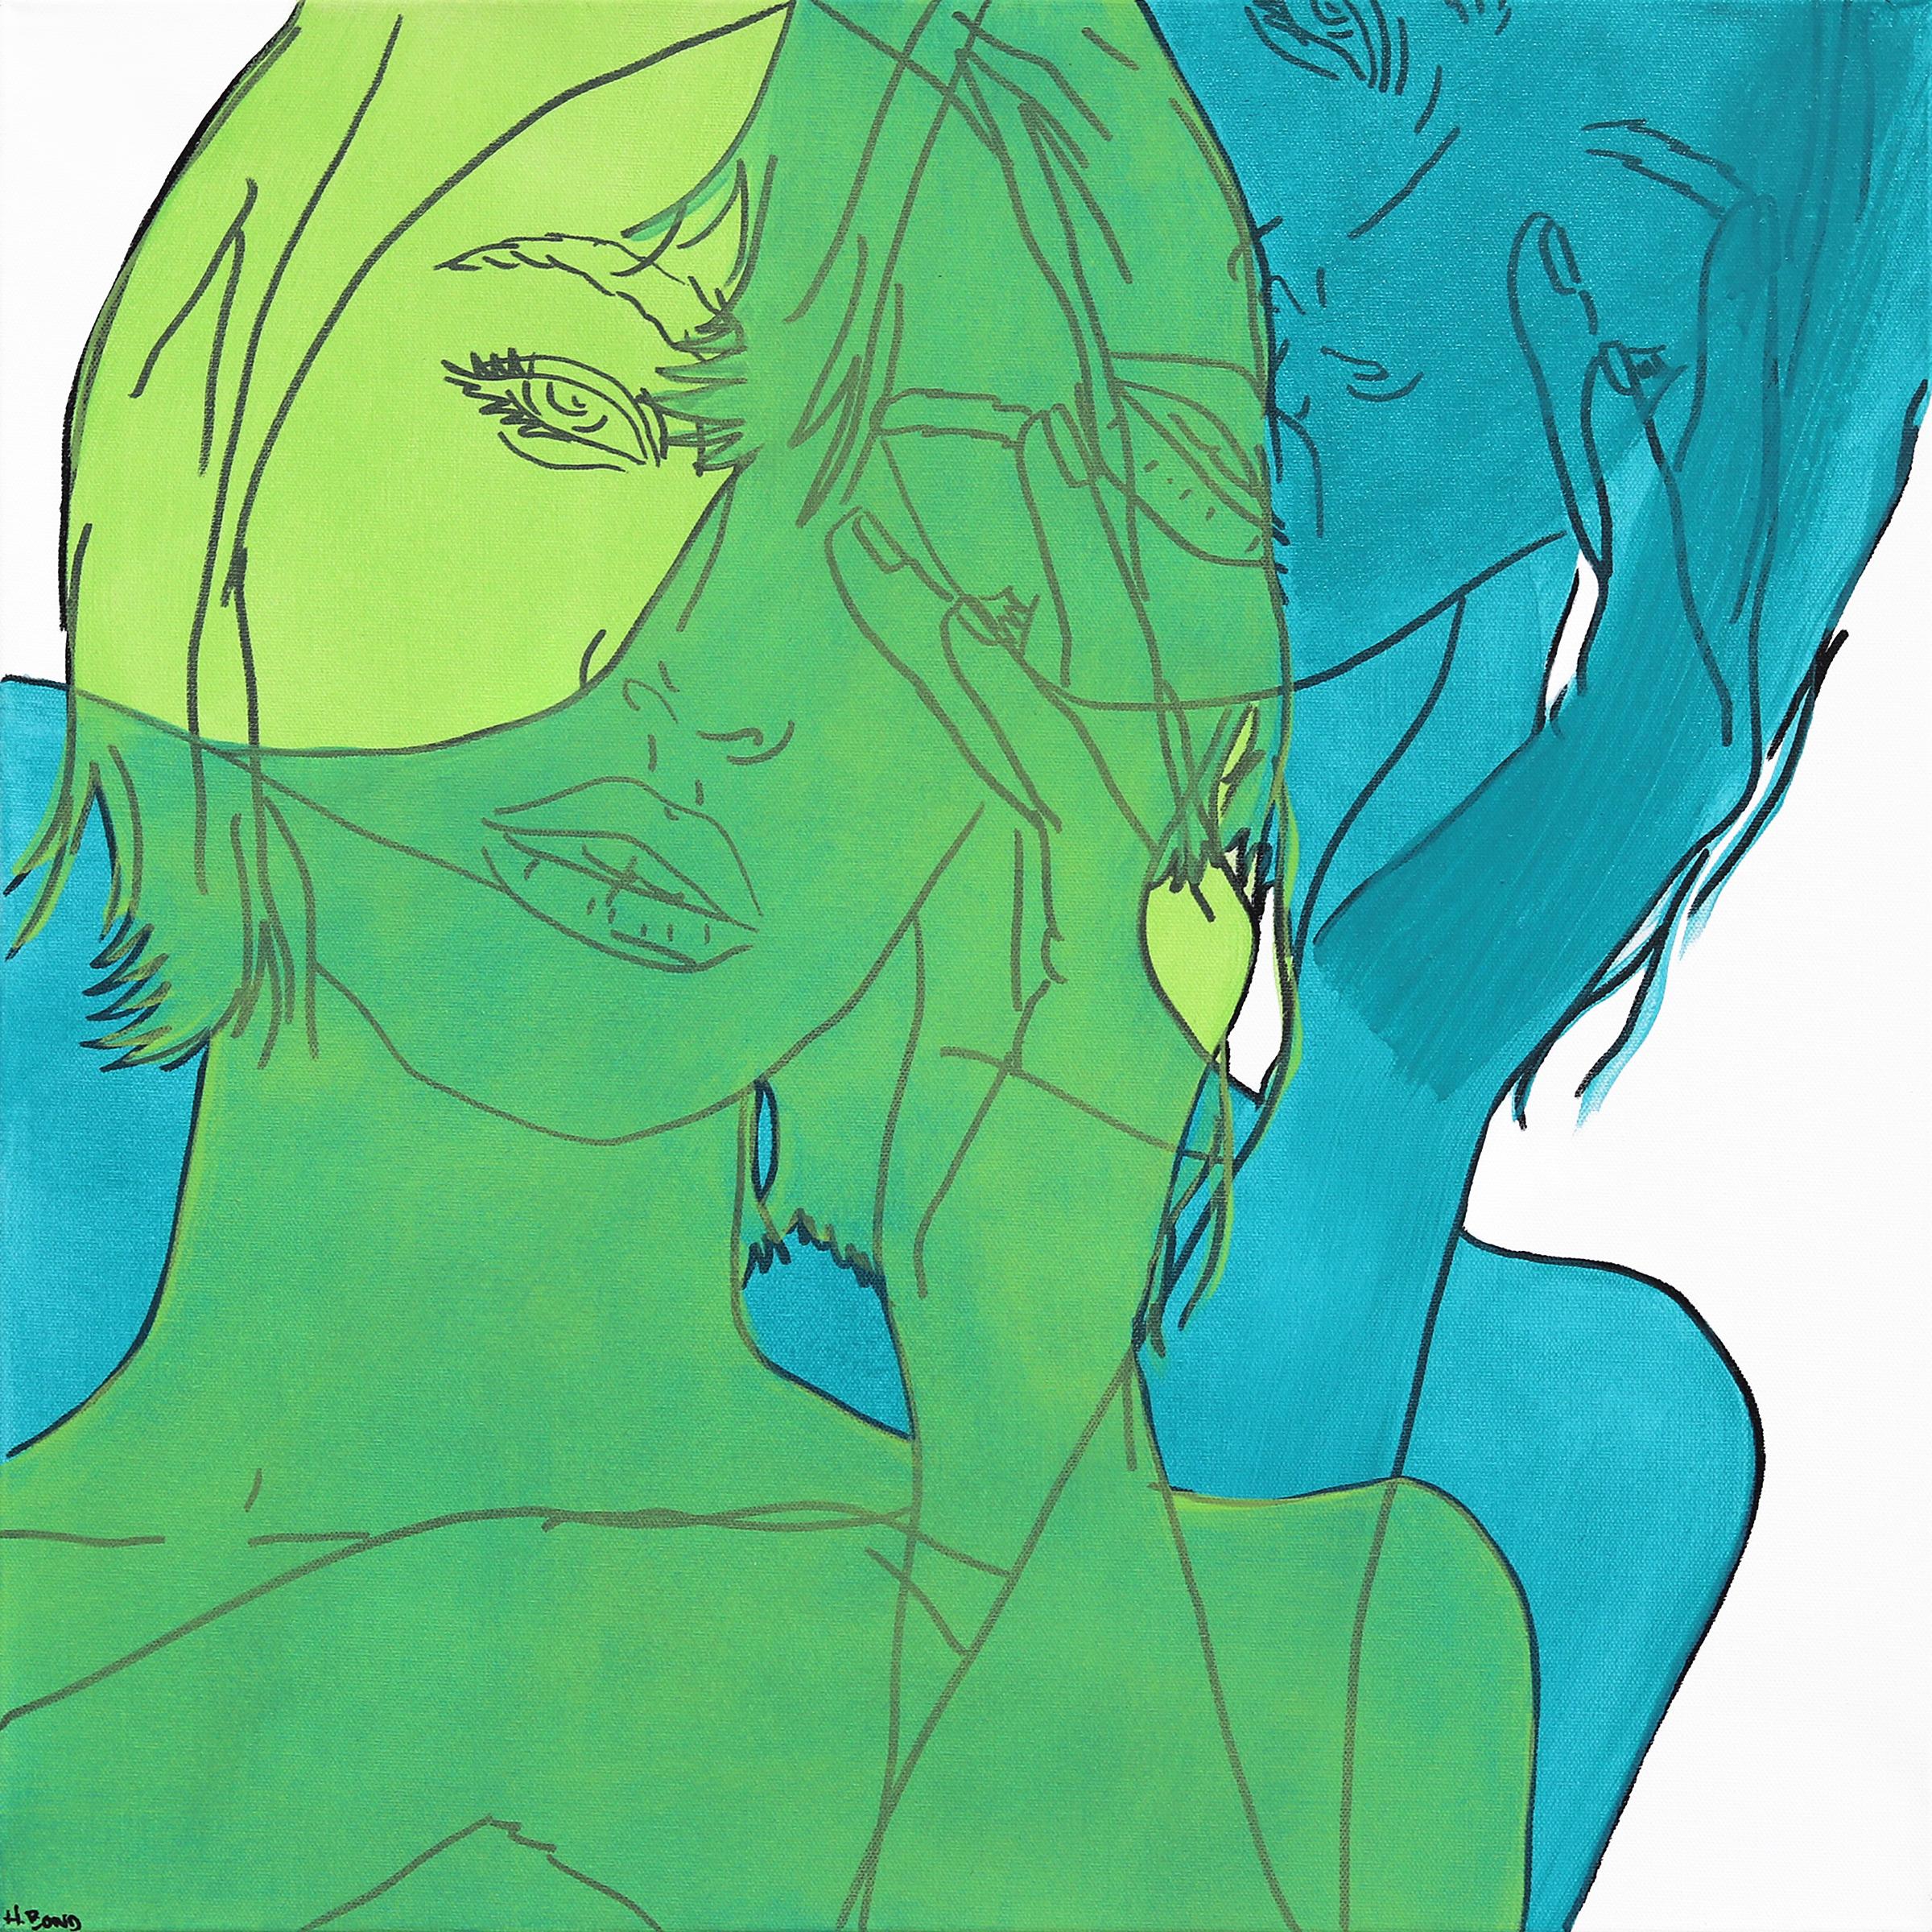 Untitled (Spring I) - Portrait figuratif de femme verte et bleue - Peinture Pop Art - Mixed Media Art de Hilary Bond